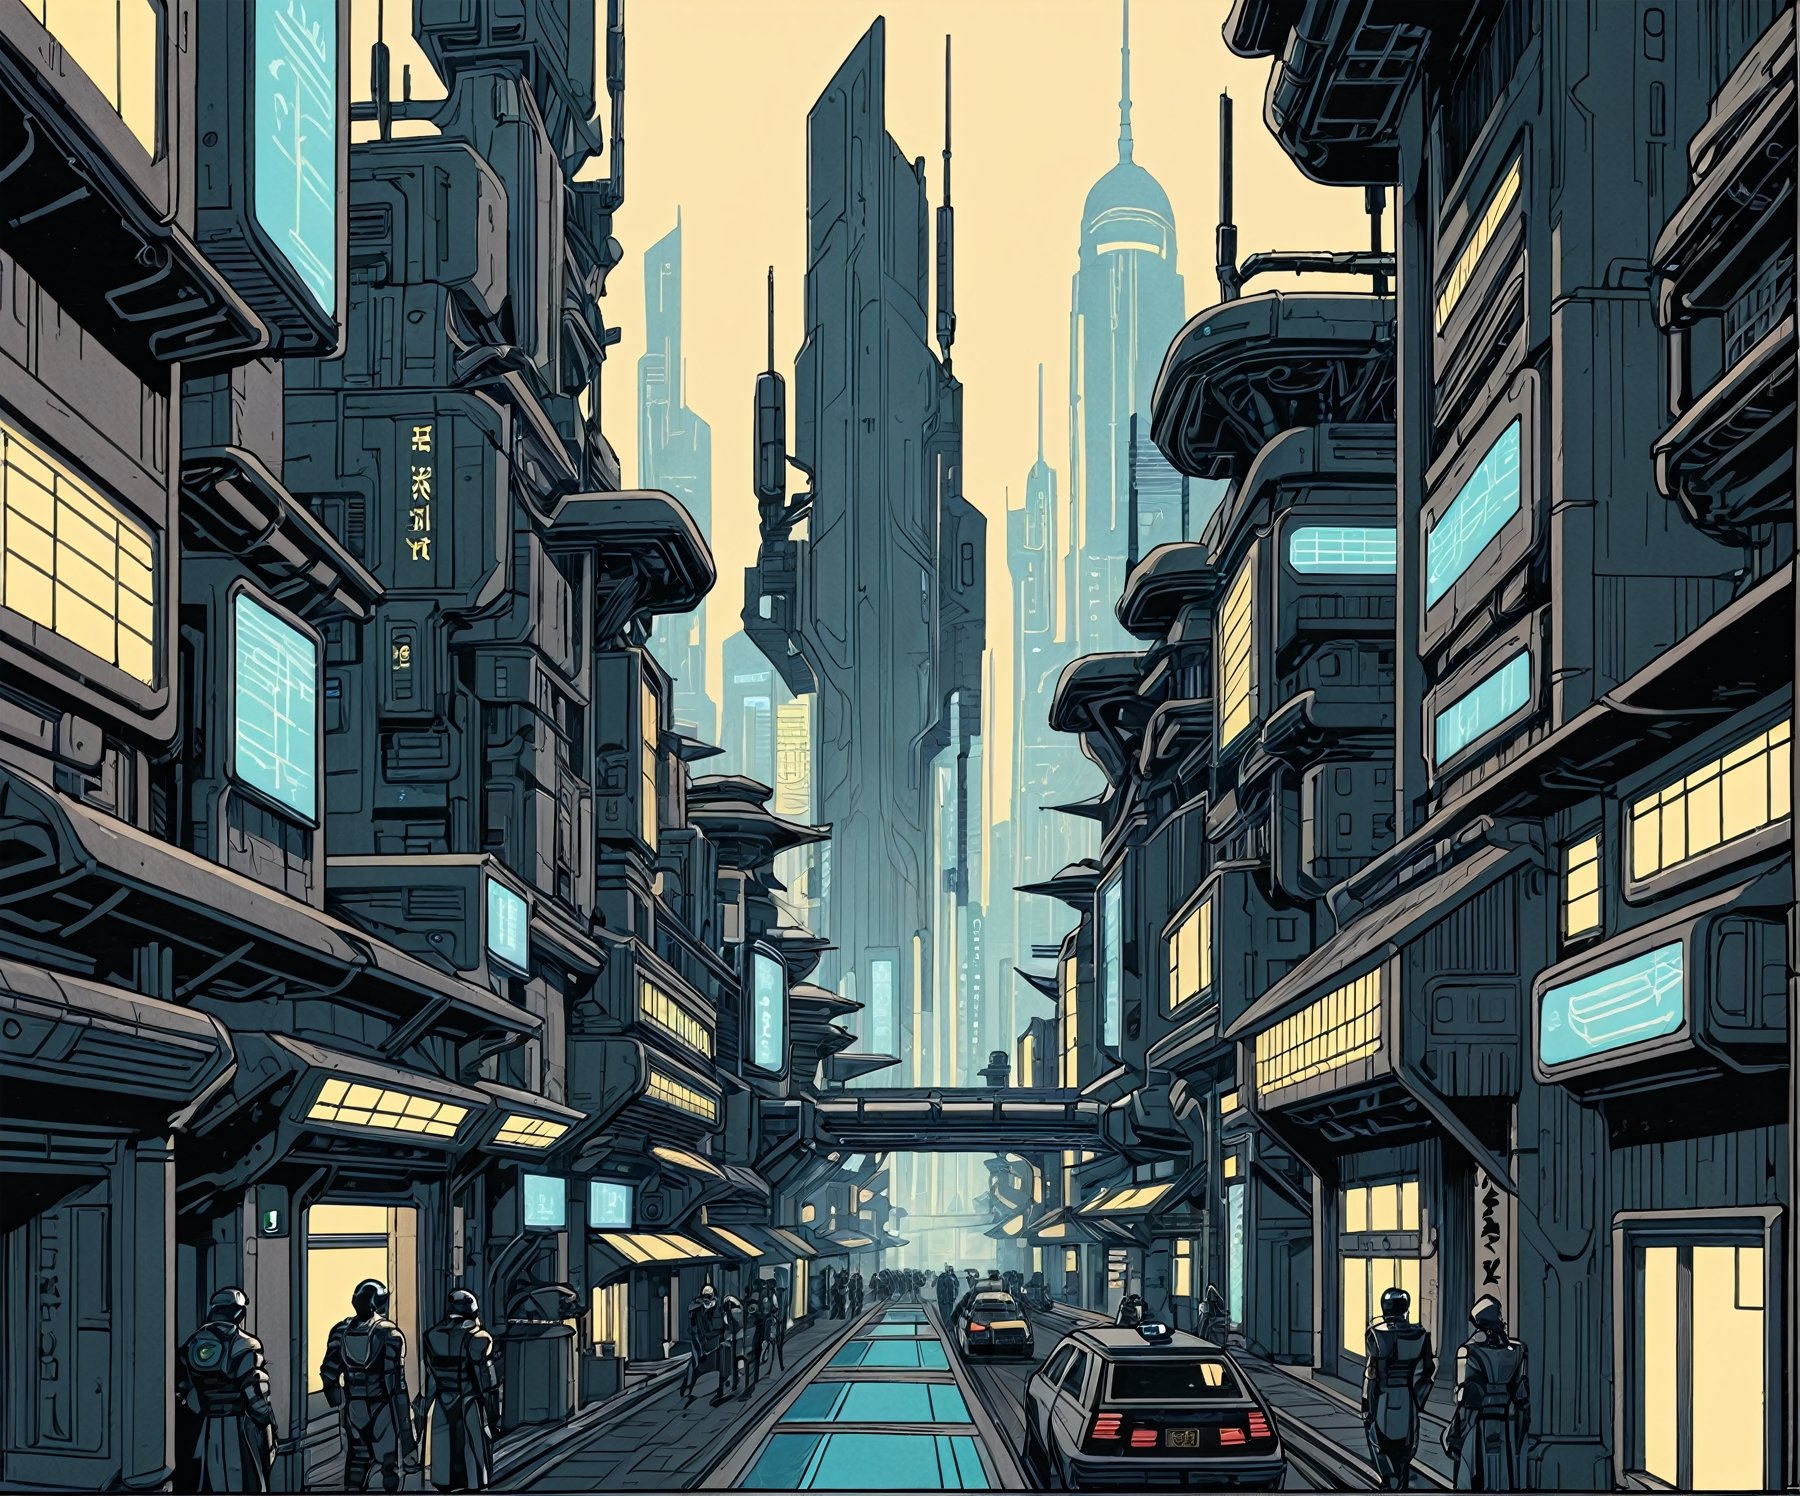 ukyoe woodblock drawing of an futuristic cyberpunk city